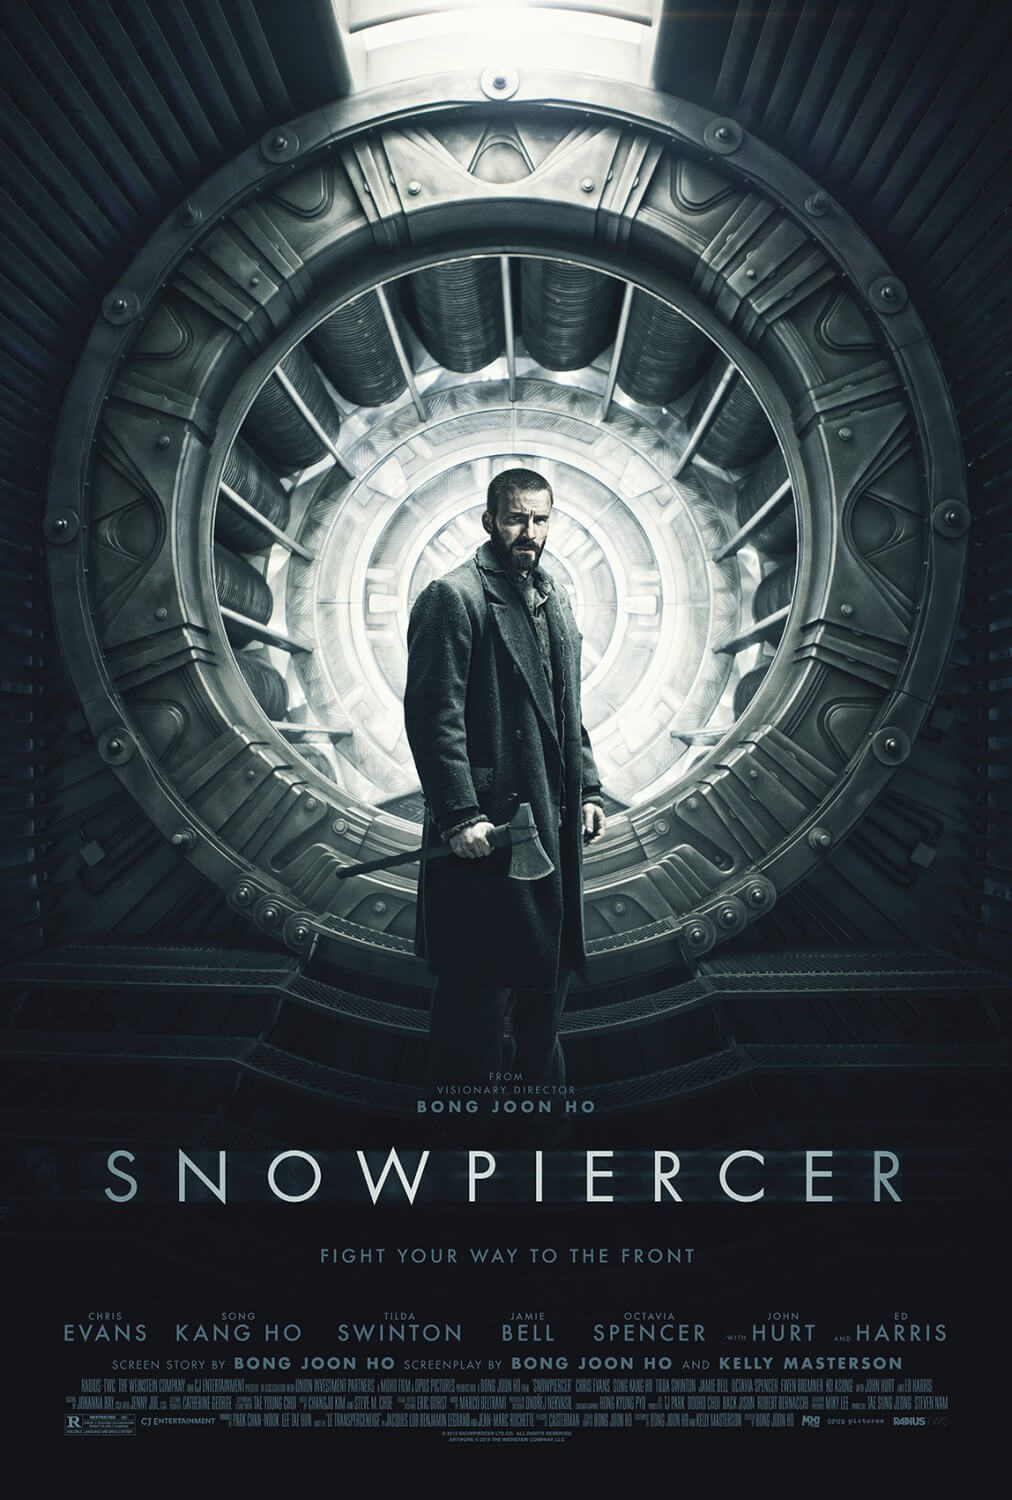 Snowpiercer 2013 Poster Classifilm.com برف شکن